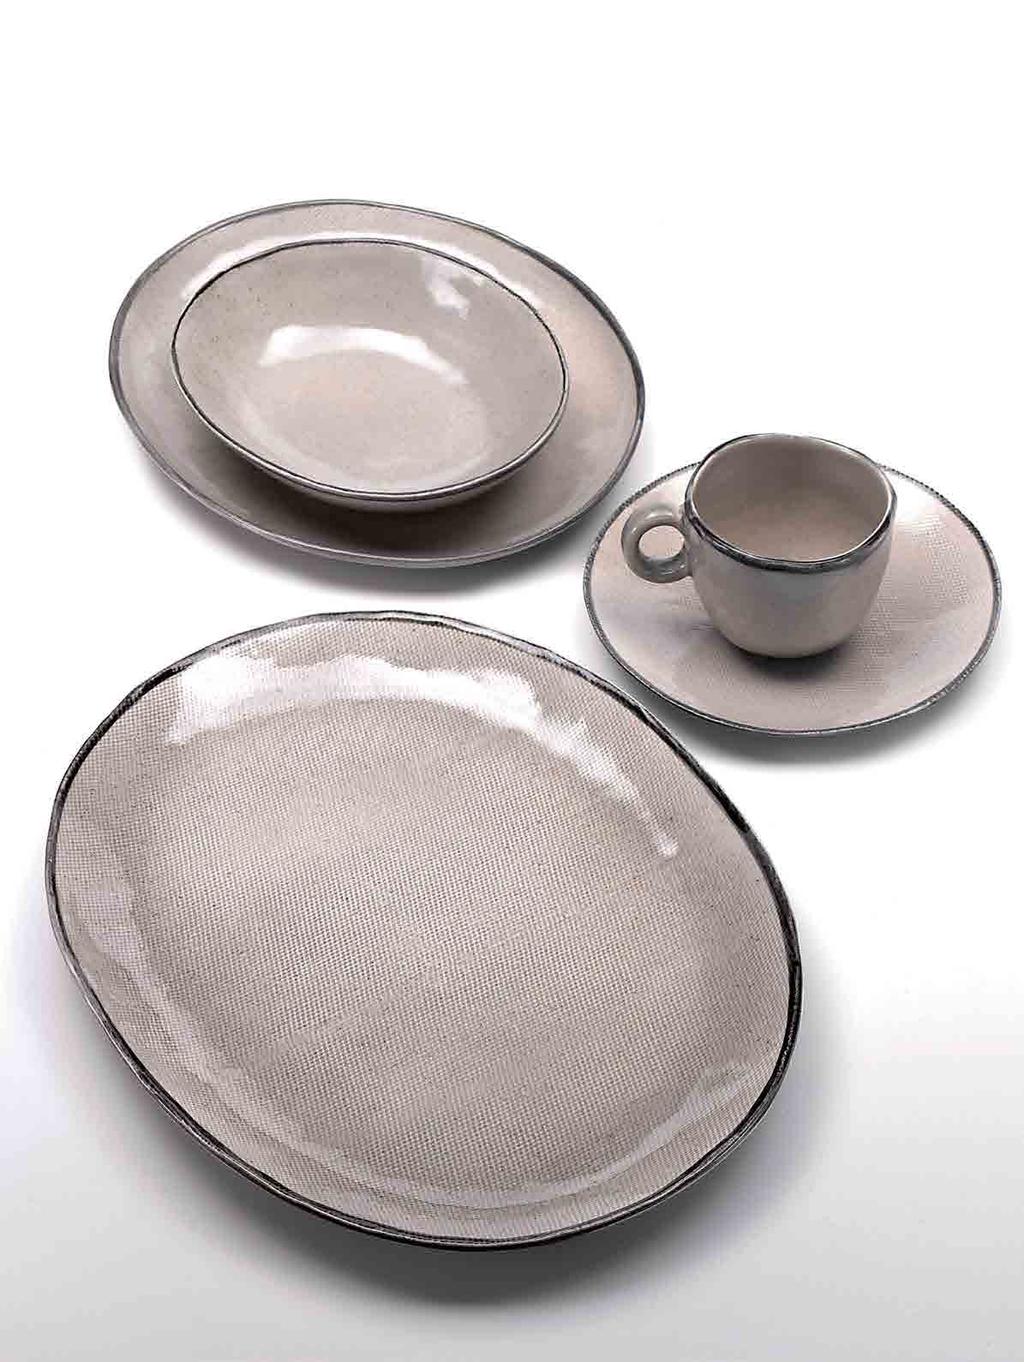 JUTA Stoneware lavabile in lavastoviglie. Resistente in microonde. Dishwasher and microwave safe stoneware.